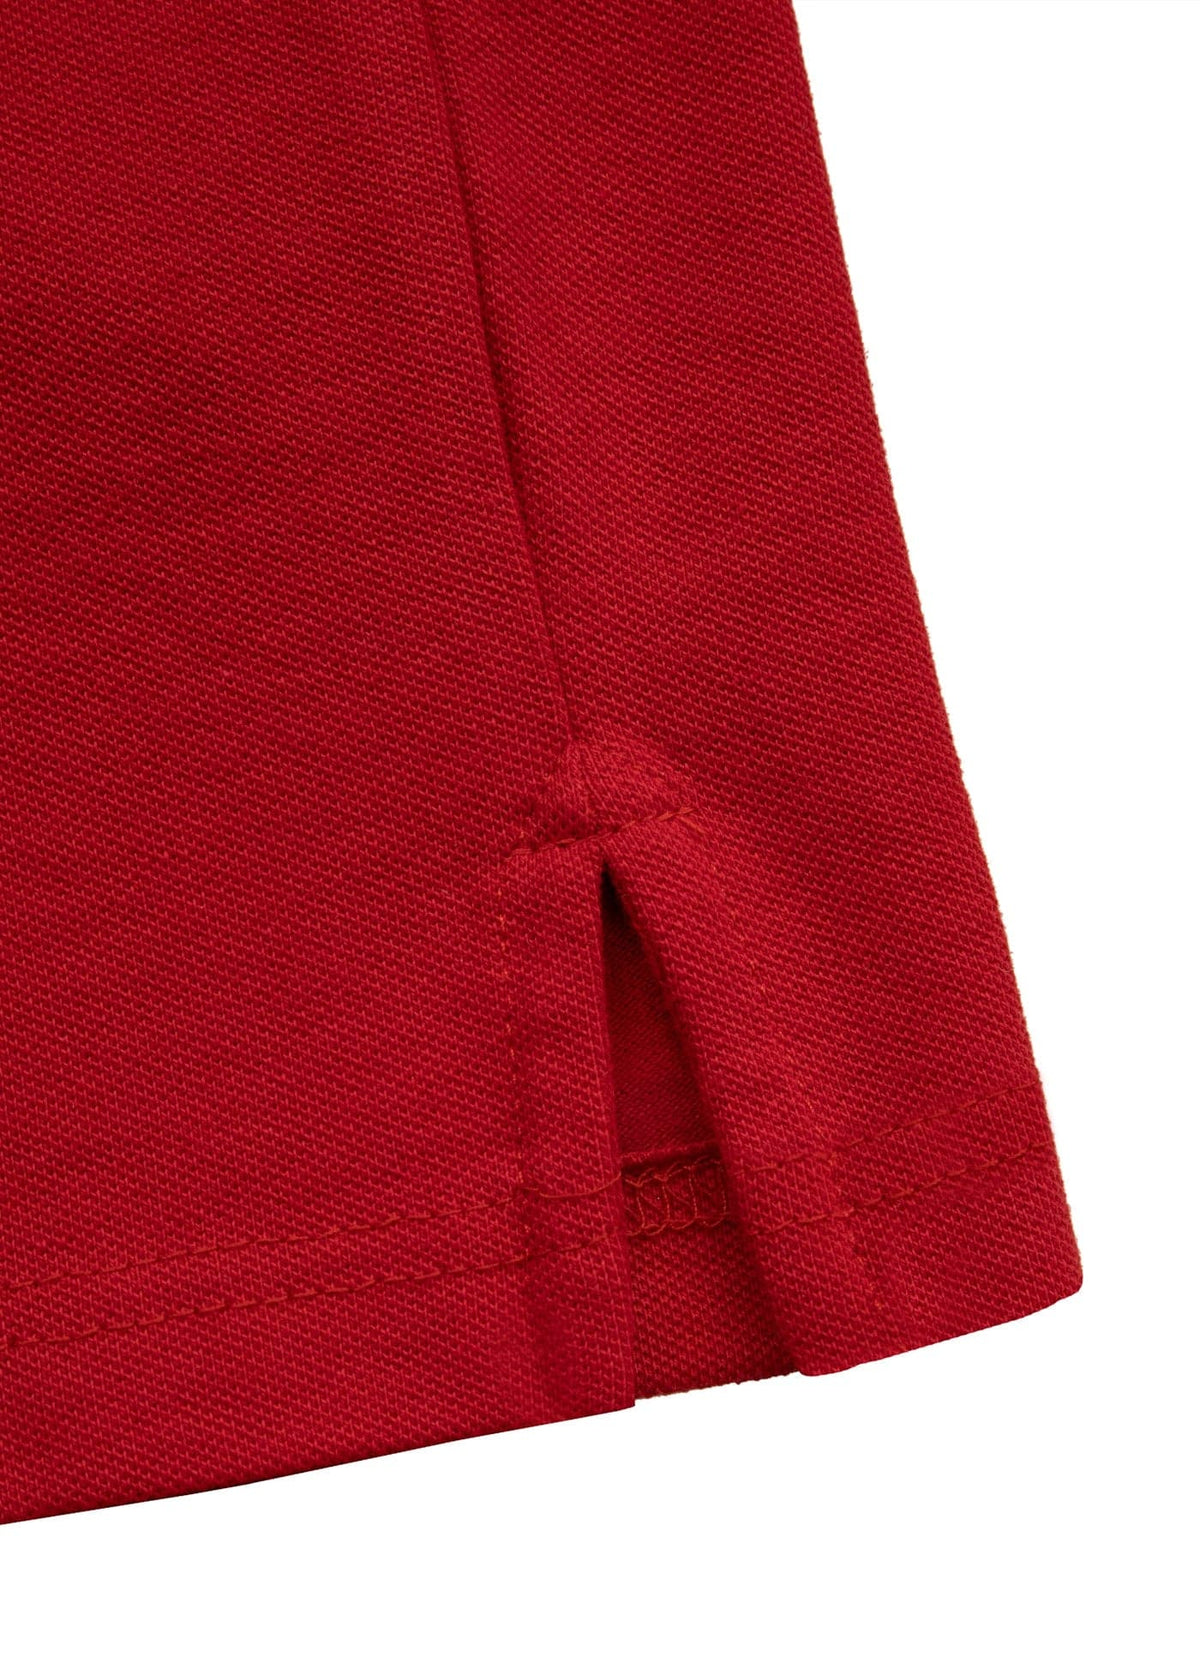 PIQUE REGULAR Red Polo T-shirt